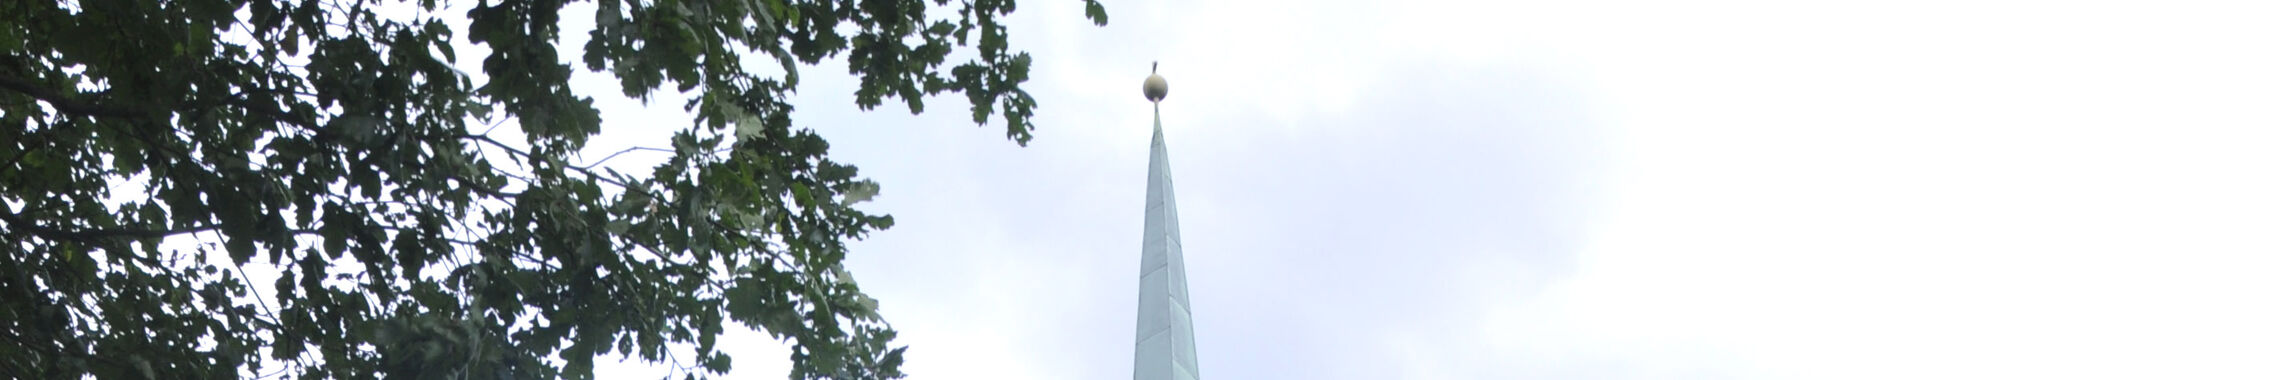 barendorf kirchturm kopfbild